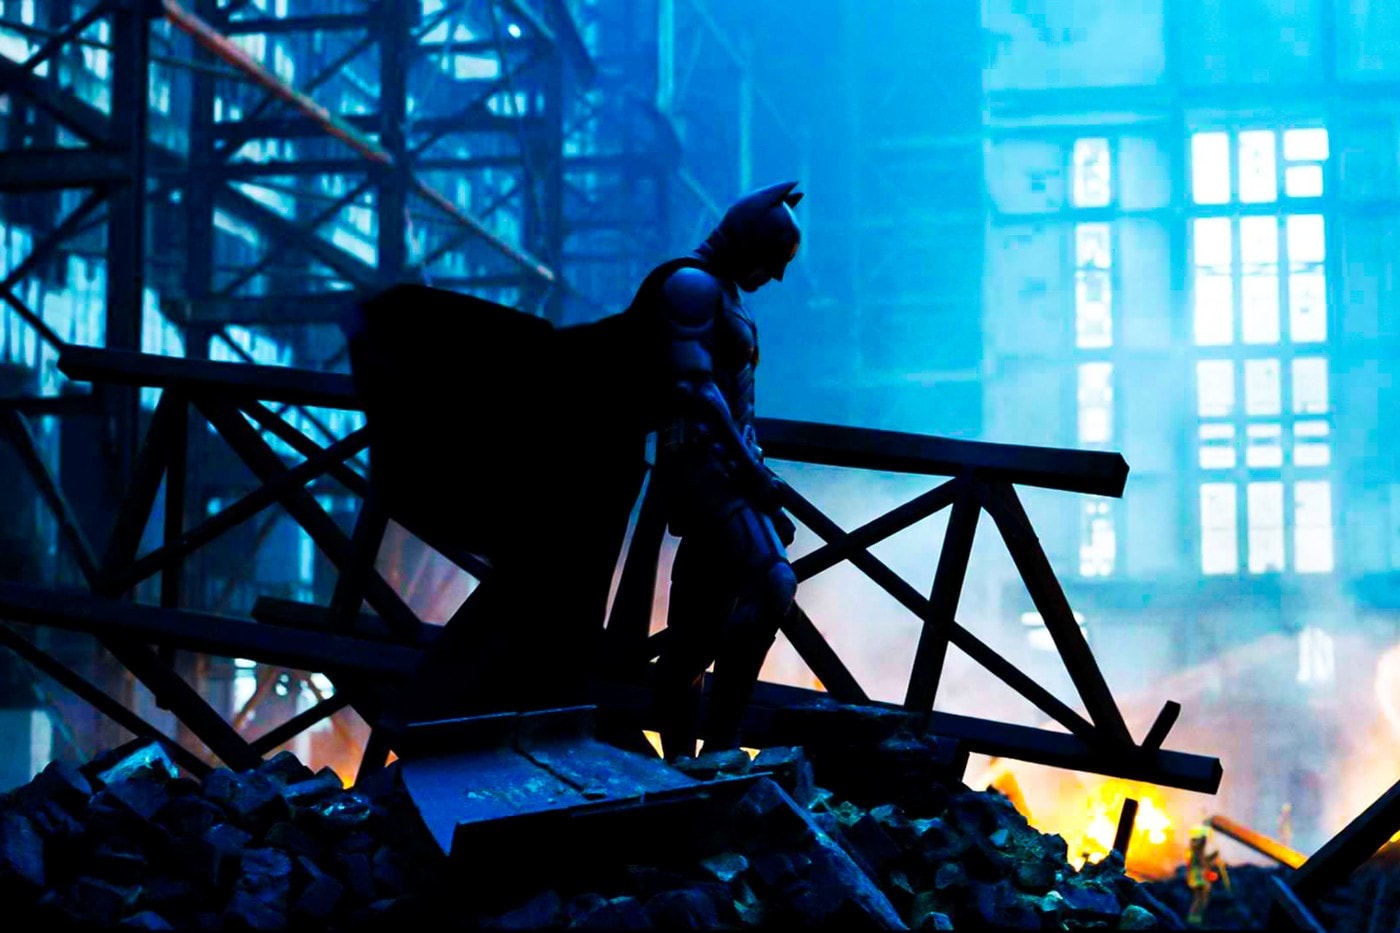 Christopher Nolan 經典電影作品「黑暗騎士三部曲」將於下月香港再上畫